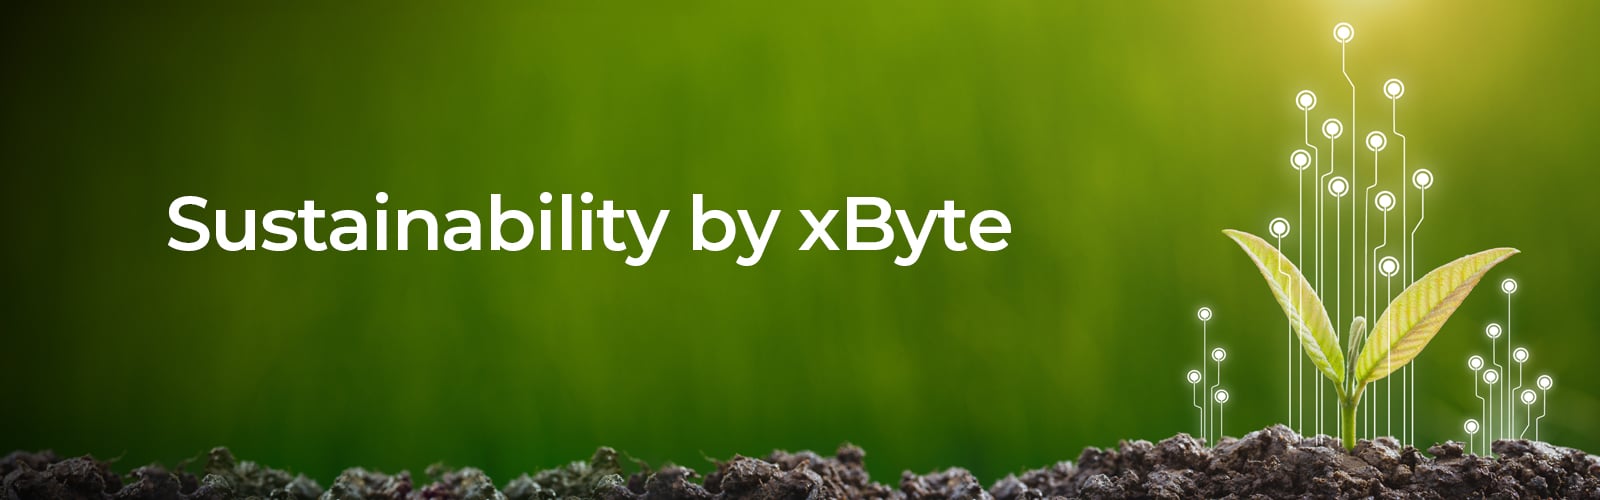 Sustainability by xByte